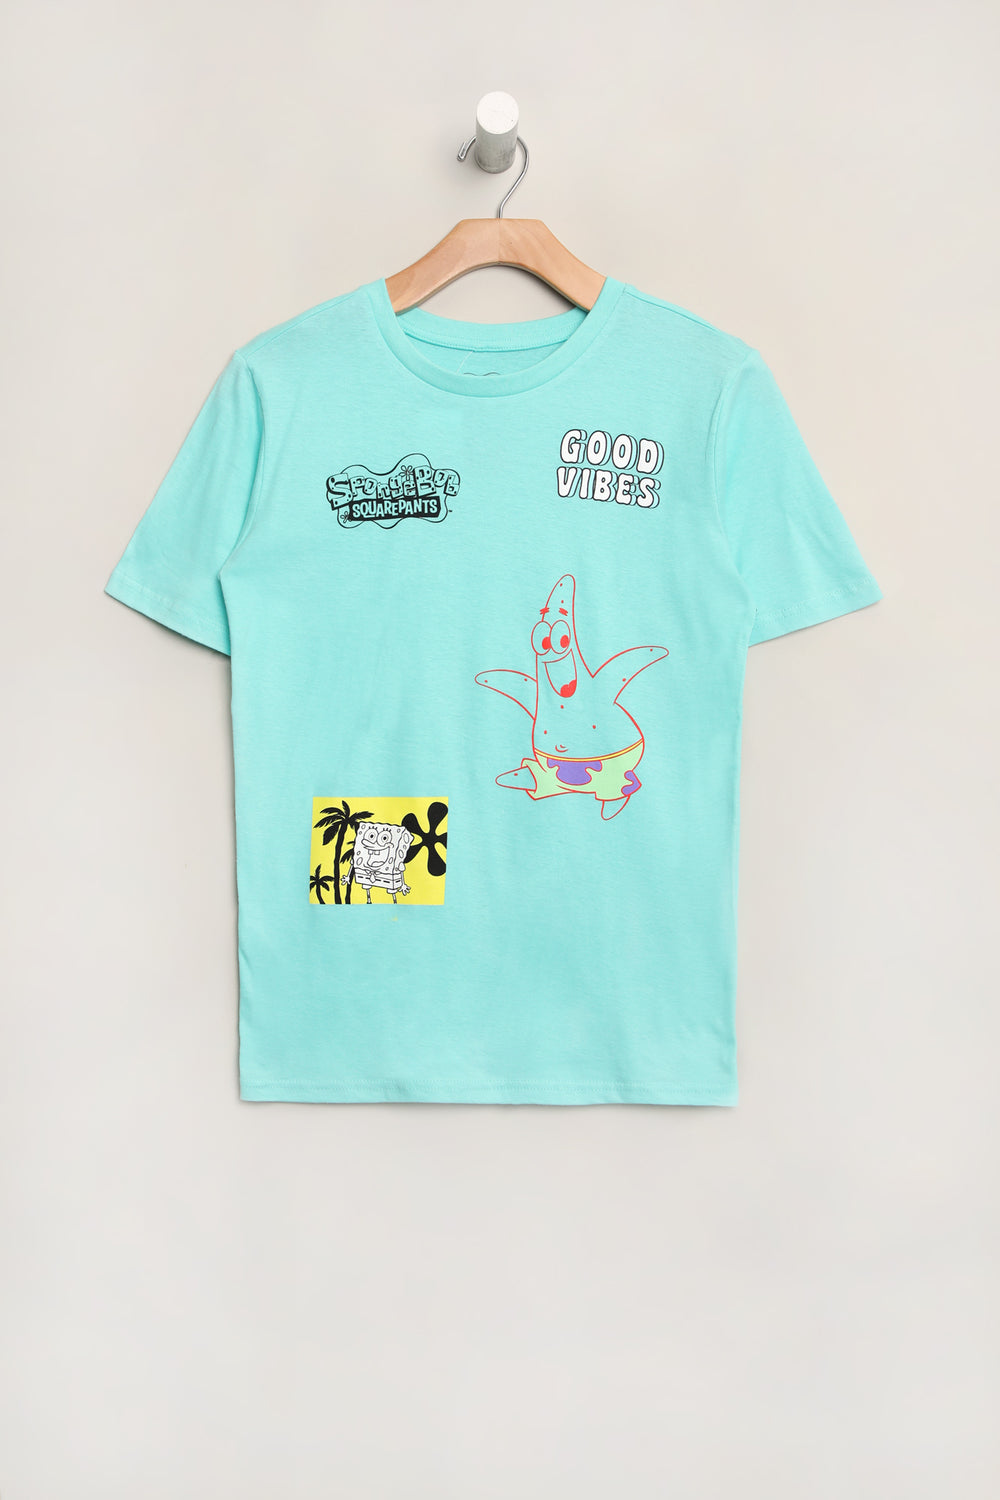 Youth SpongeBob SquarePants T-Shirt Youth SpongeBob SquarePants T-Shirt